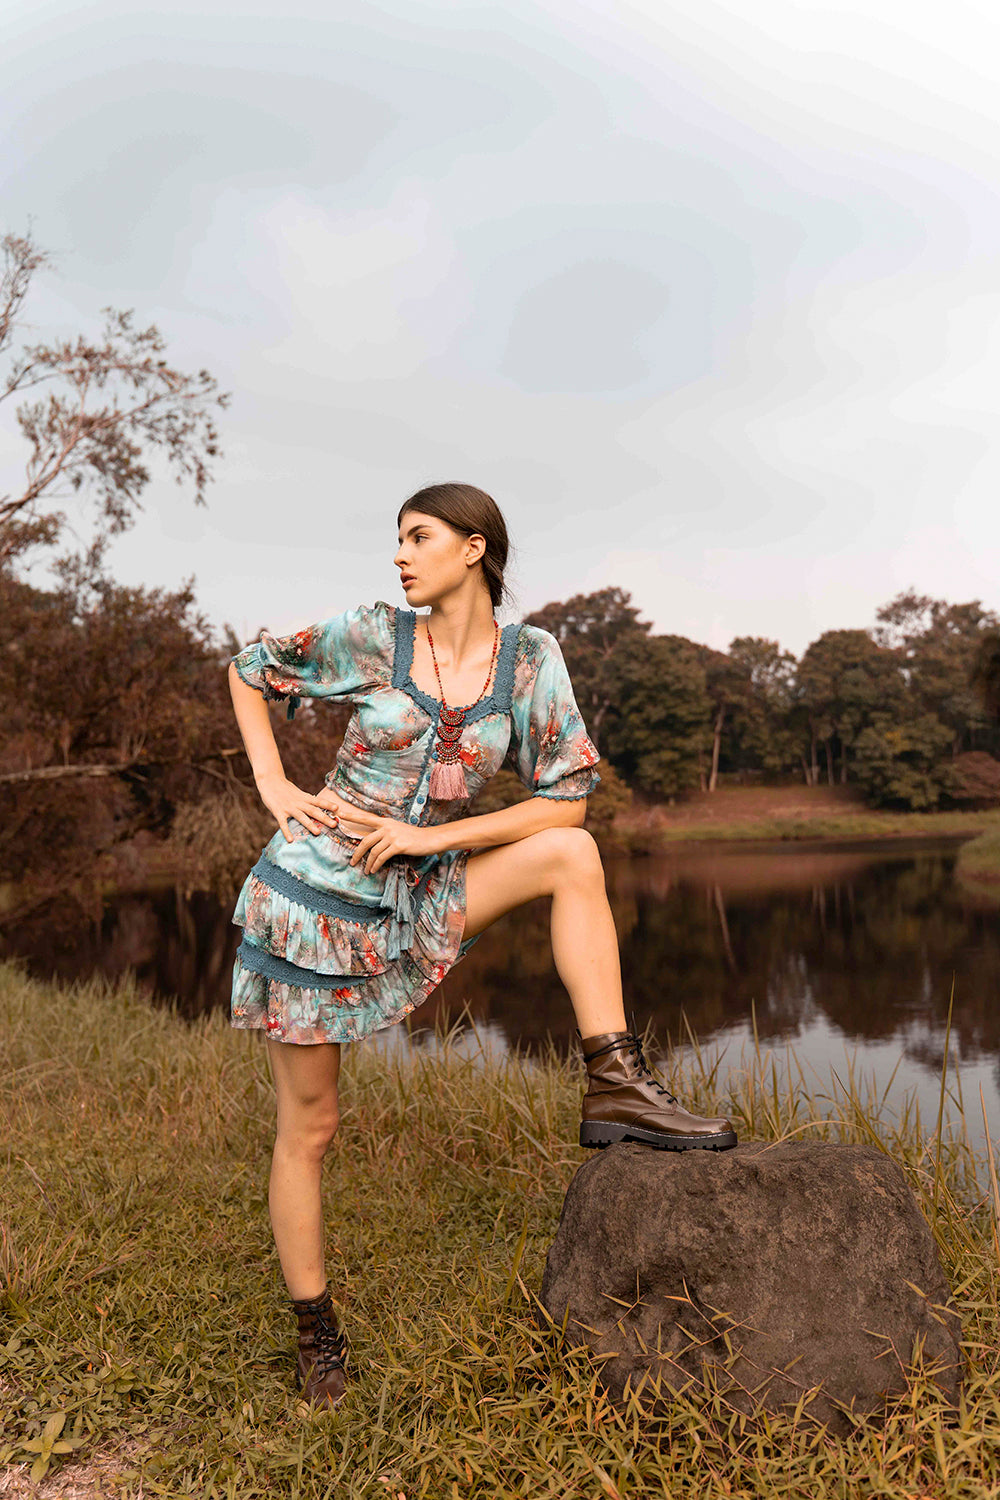 Aveline Mini Skirt, embrace your boho spirit with this sustainable fashion staple